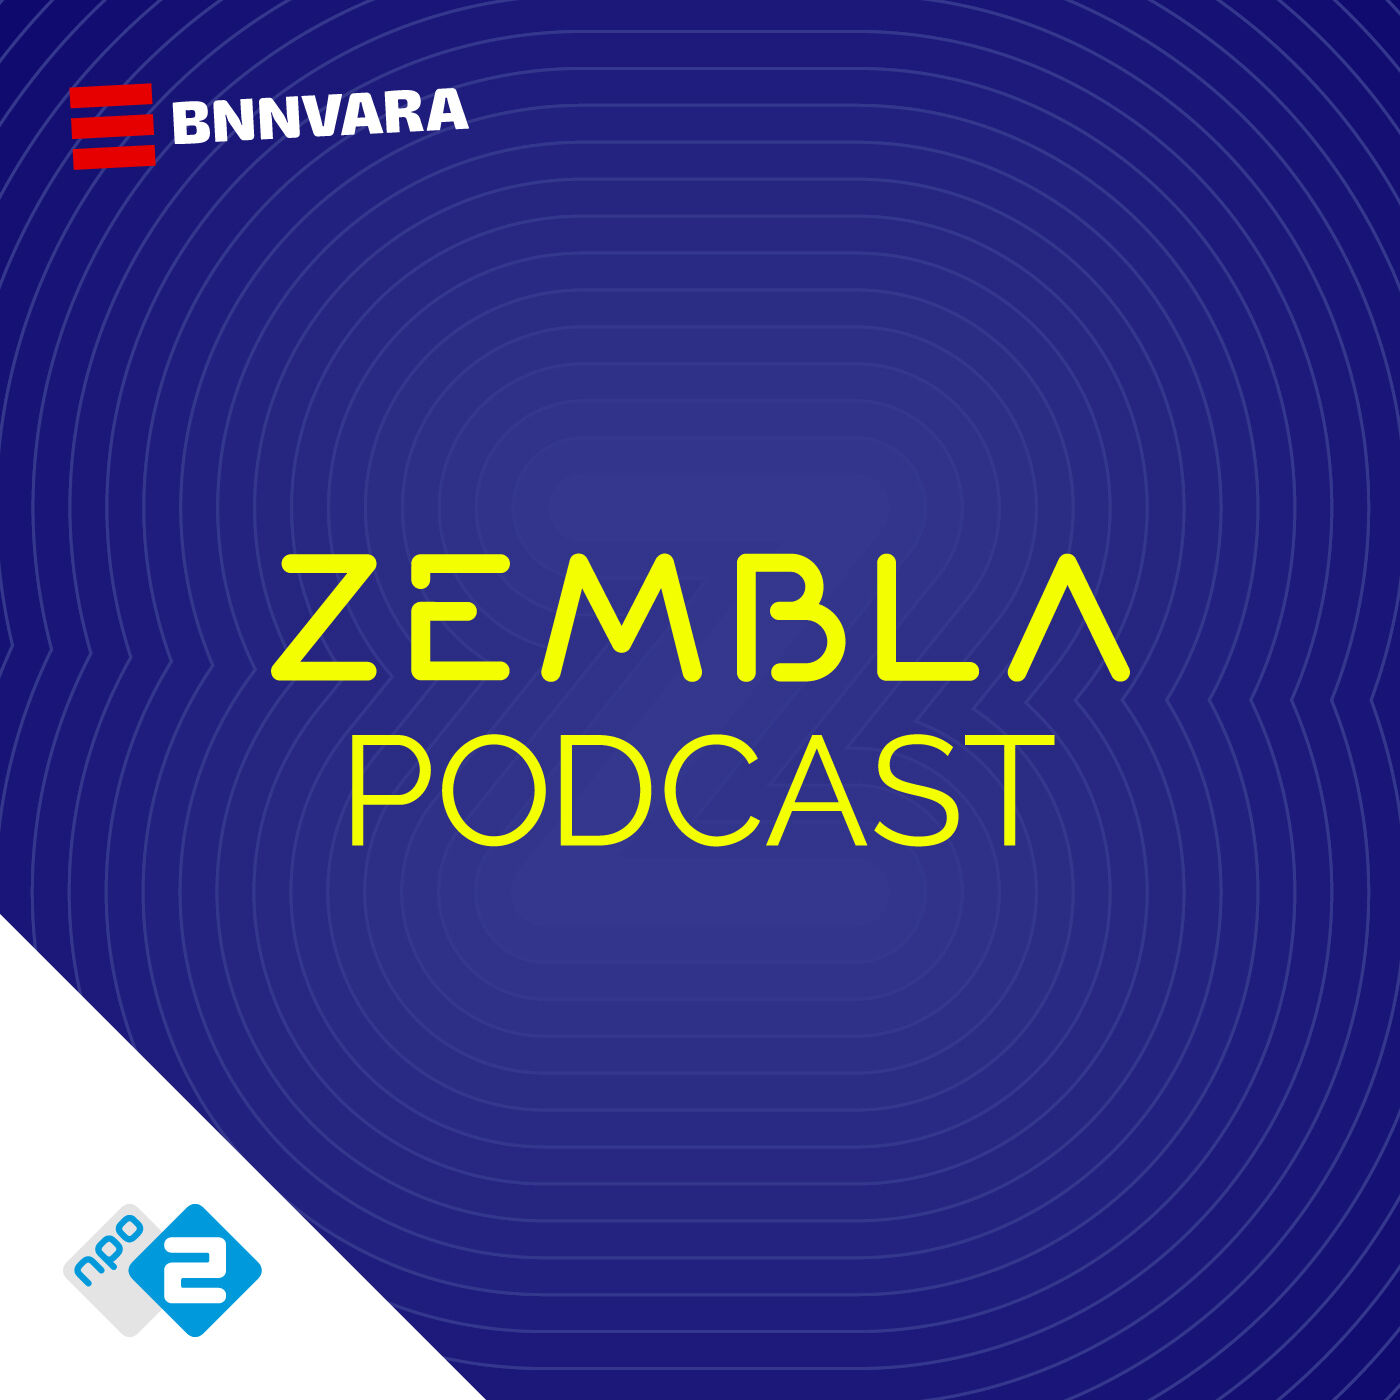 Zembla Podcast logo